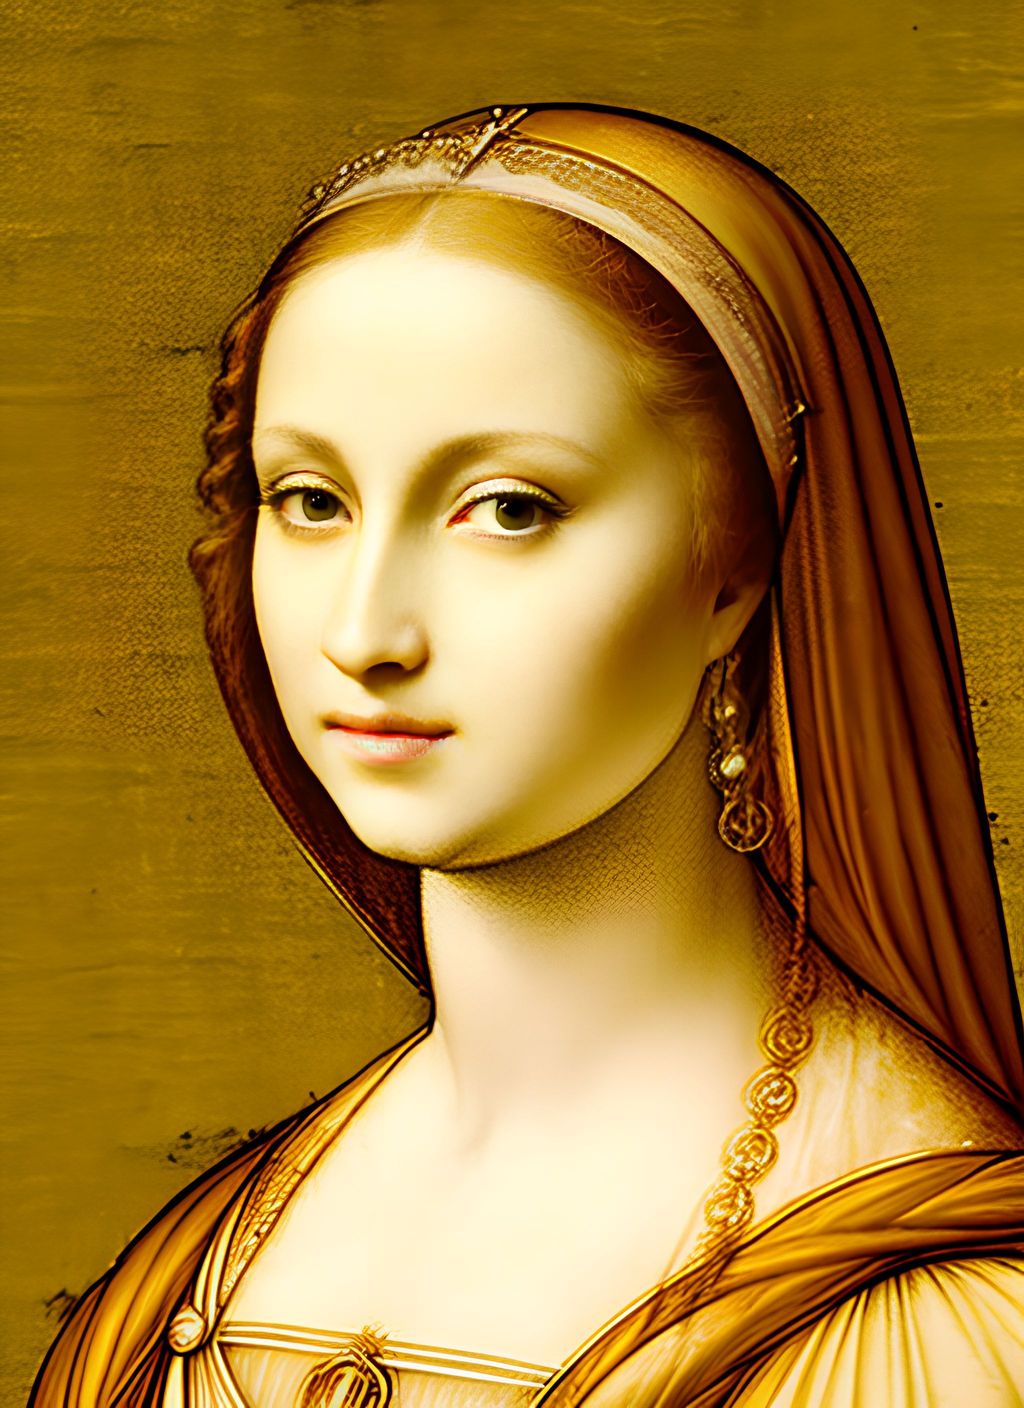 Prompt: Renaissance princess Bianca Sforza, painting on yellowed parchment by Leonardo da Vinci